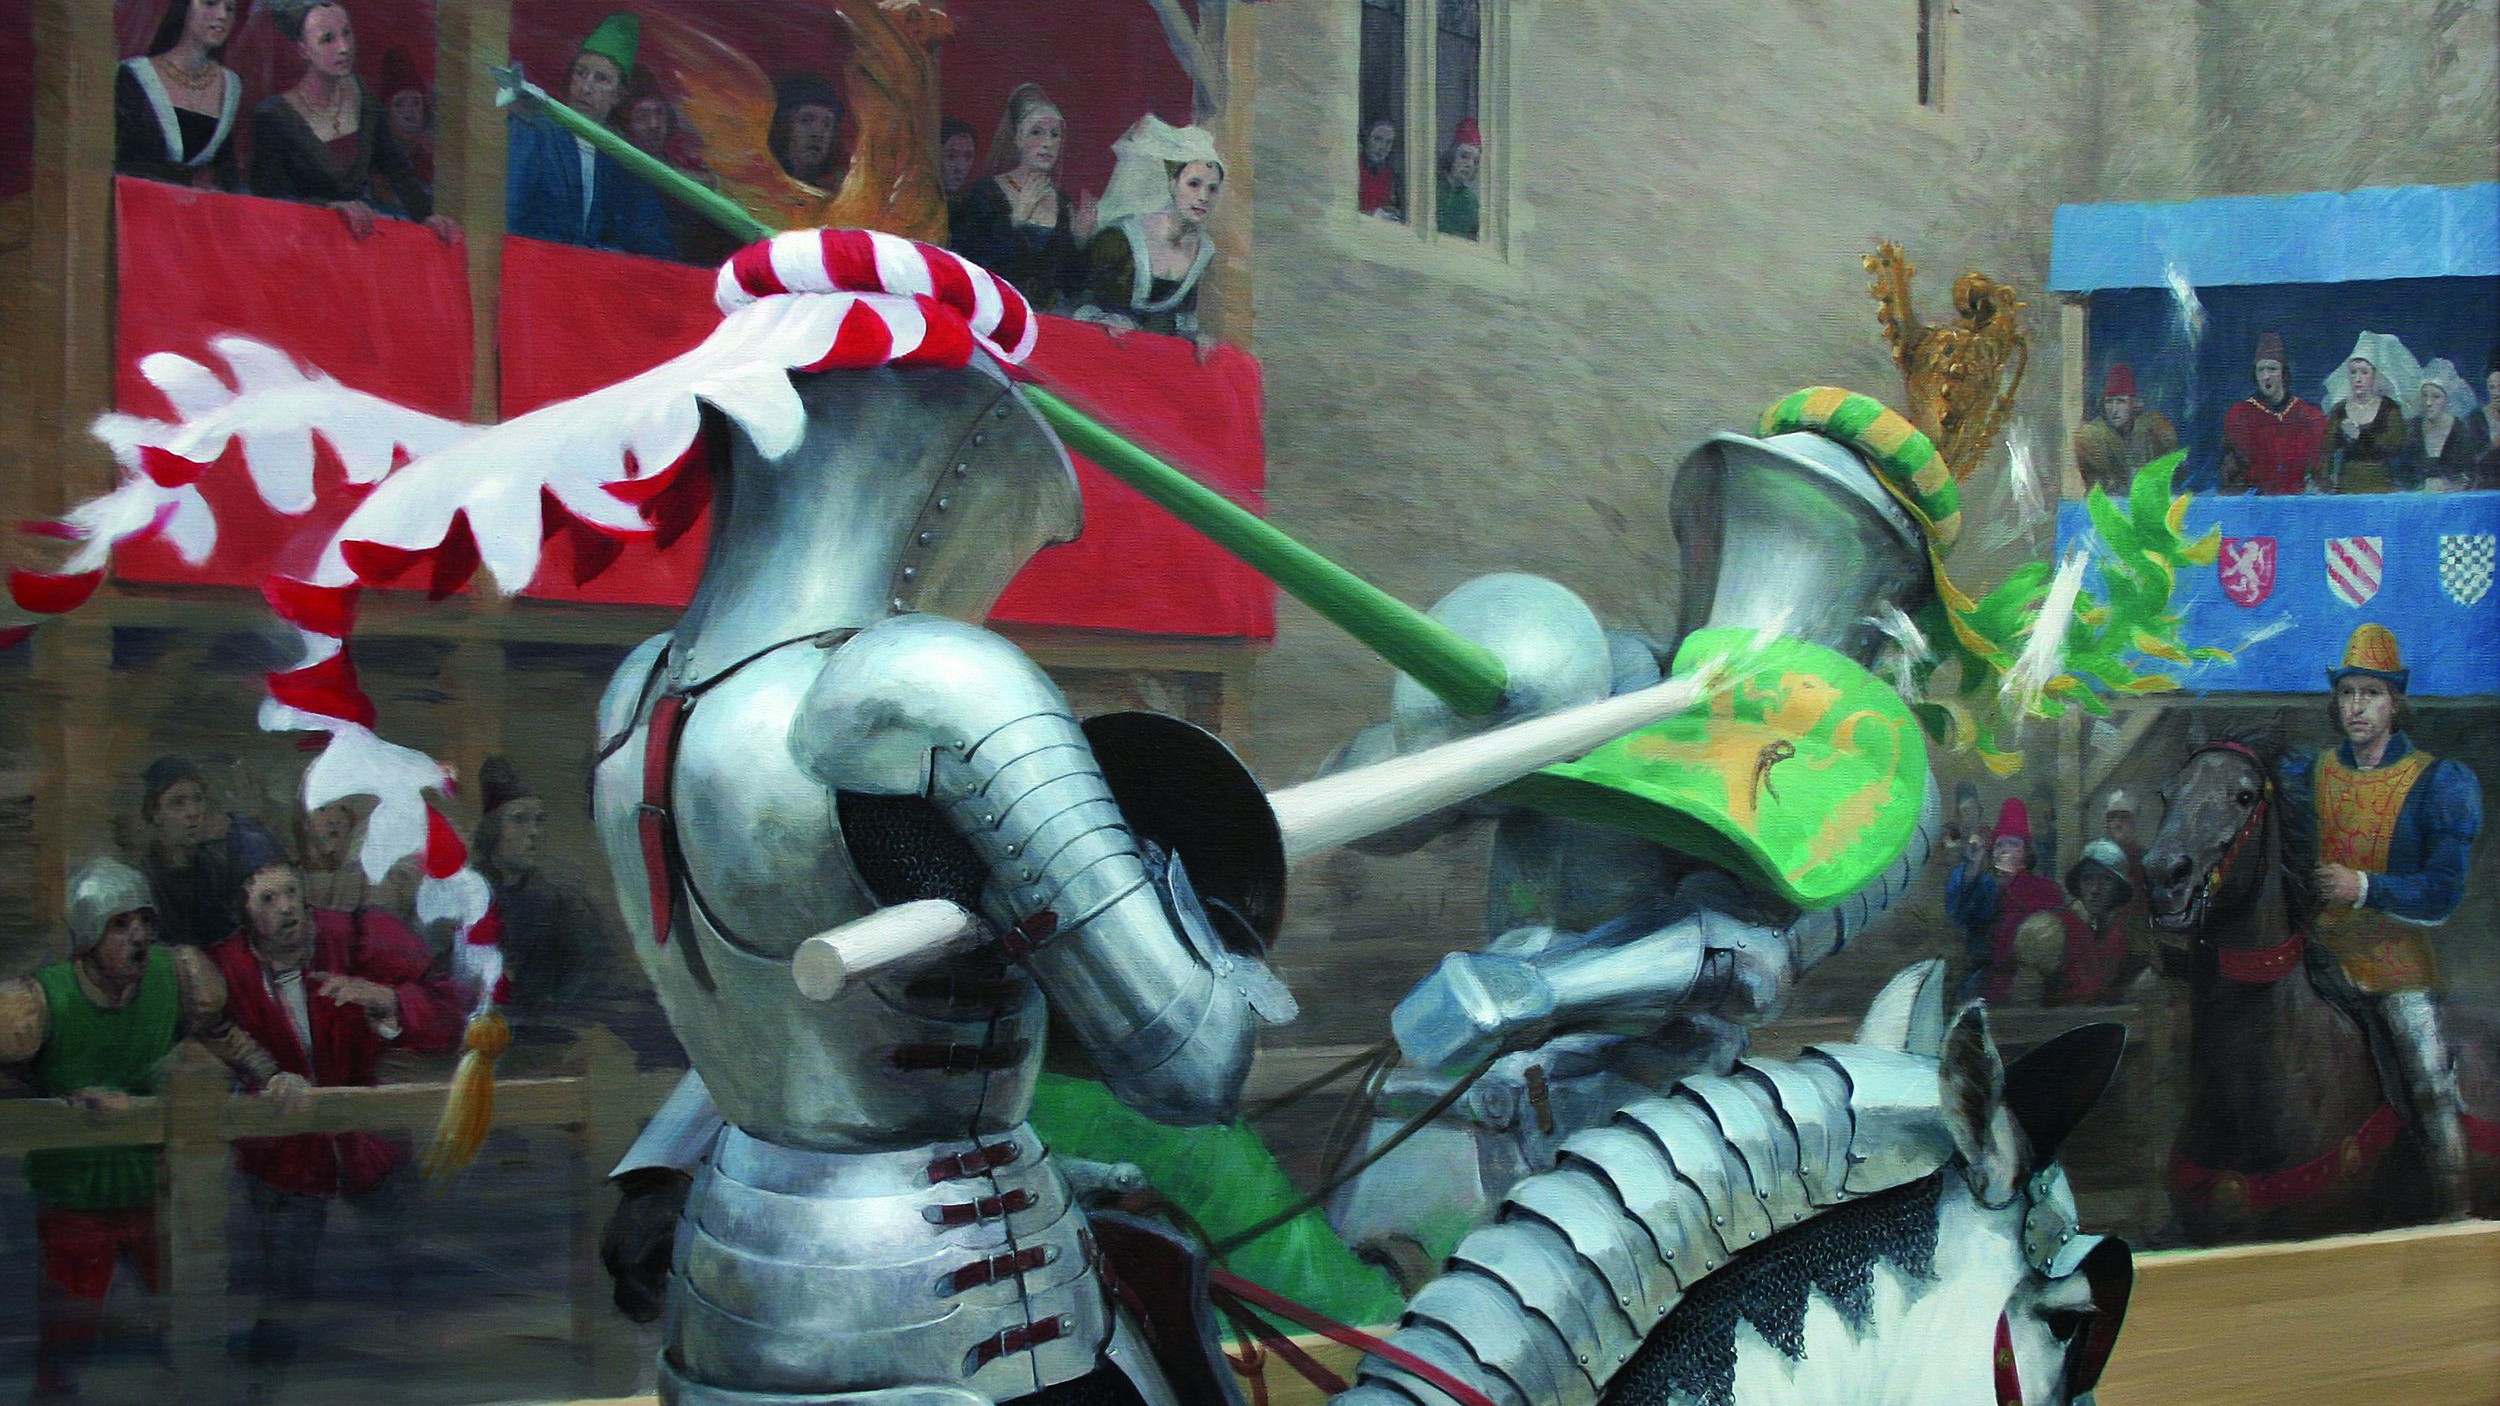 medieval art knight joust